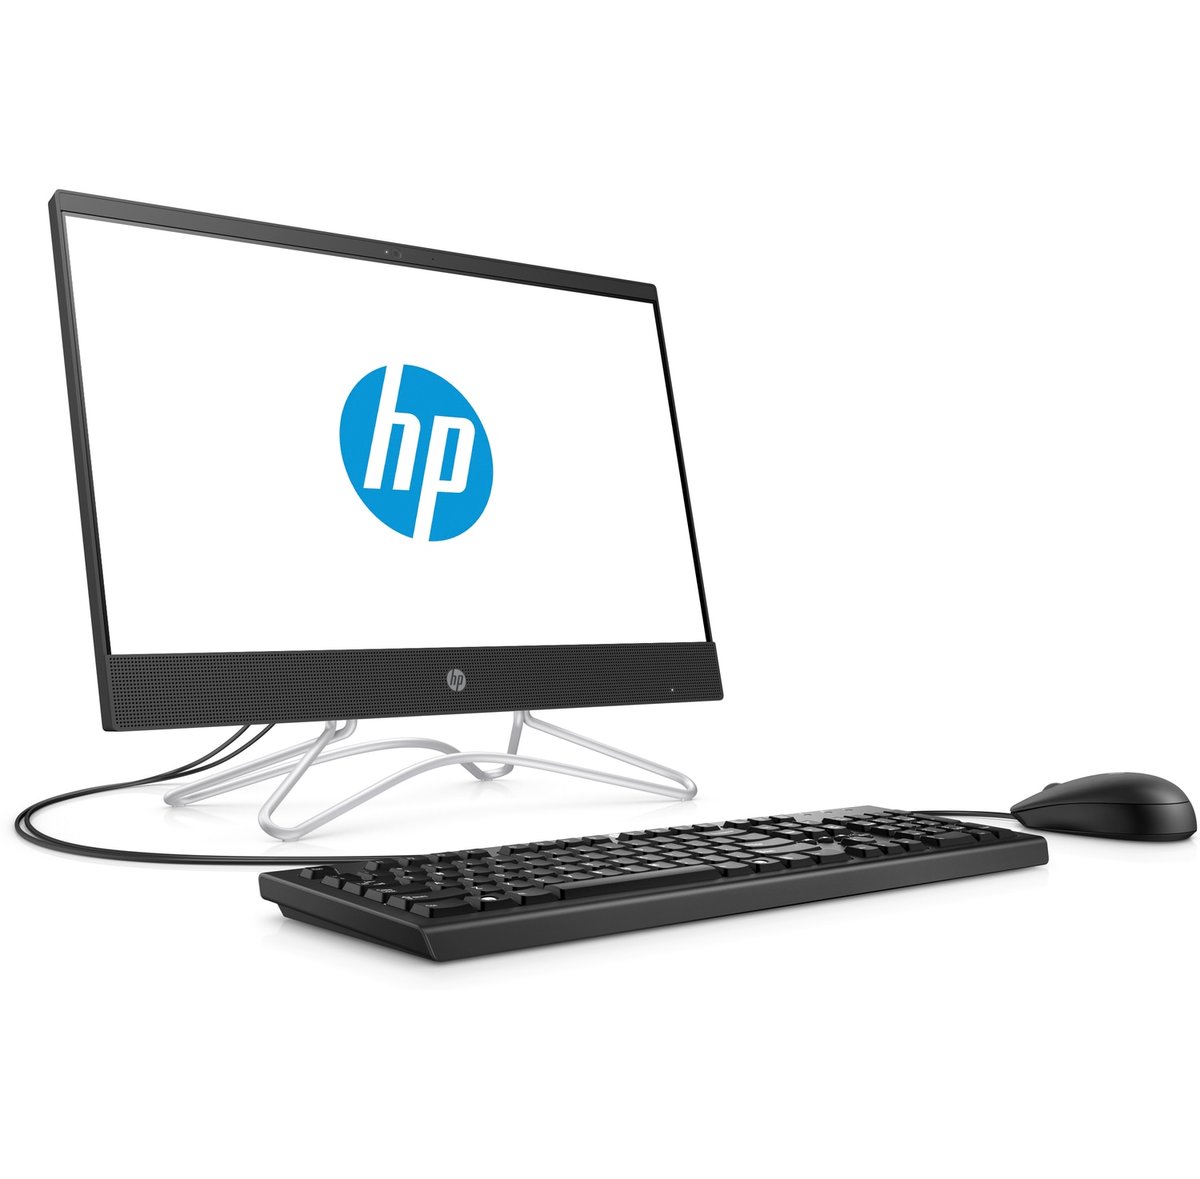 HP 200 G3 All-in-One PC Core i3-8130U, Memory 4GB, Storage 1TB, UHD Graphics 620, 21.5